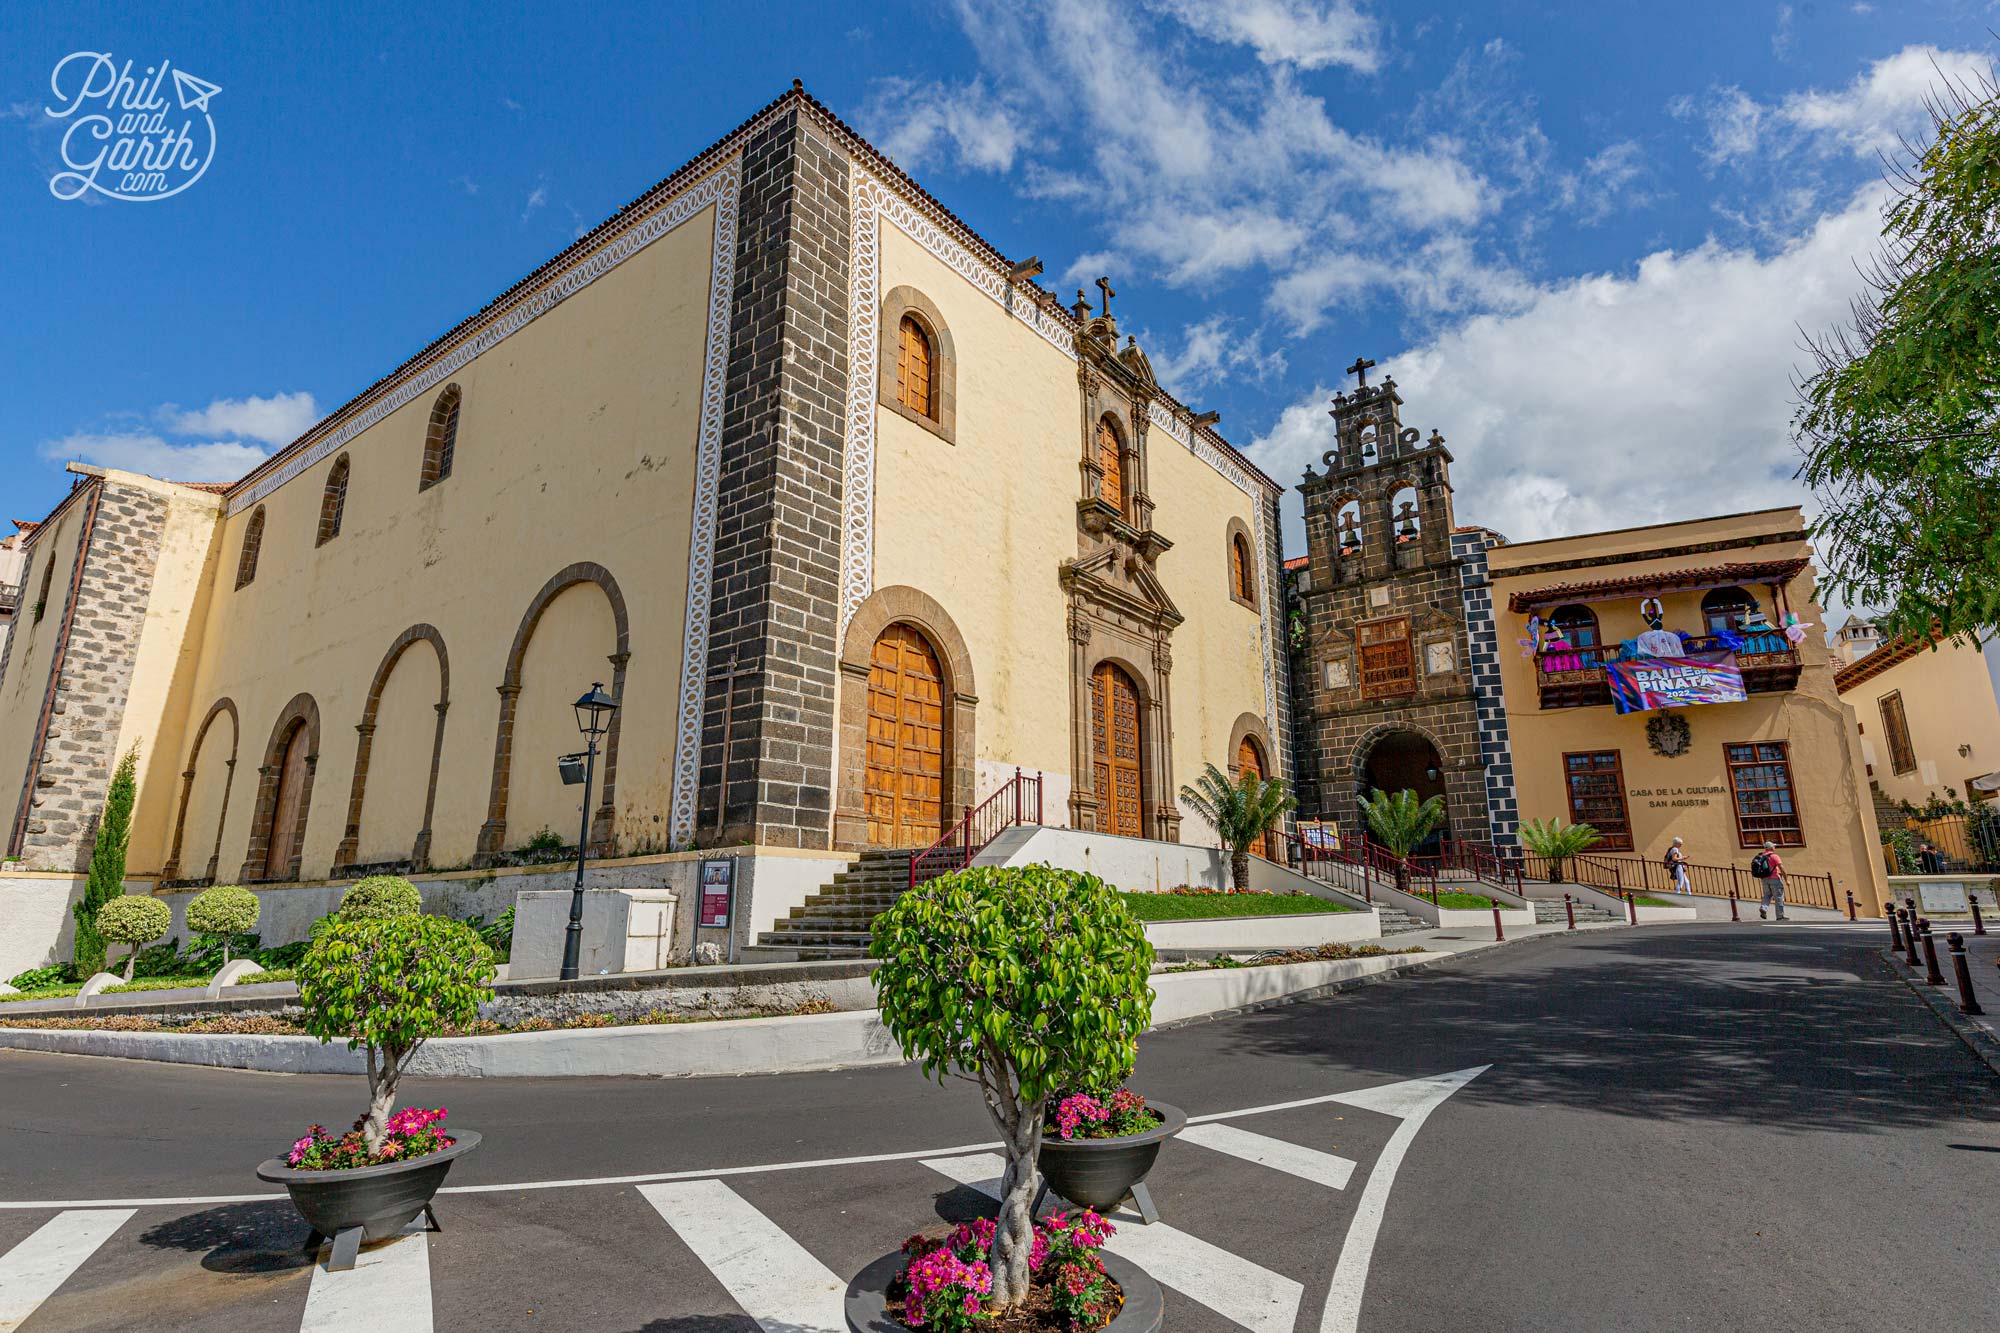 Iglesia de San Agustin - this church and former monastery was built in the 17th century. La Orotava, Tenerife, Spain